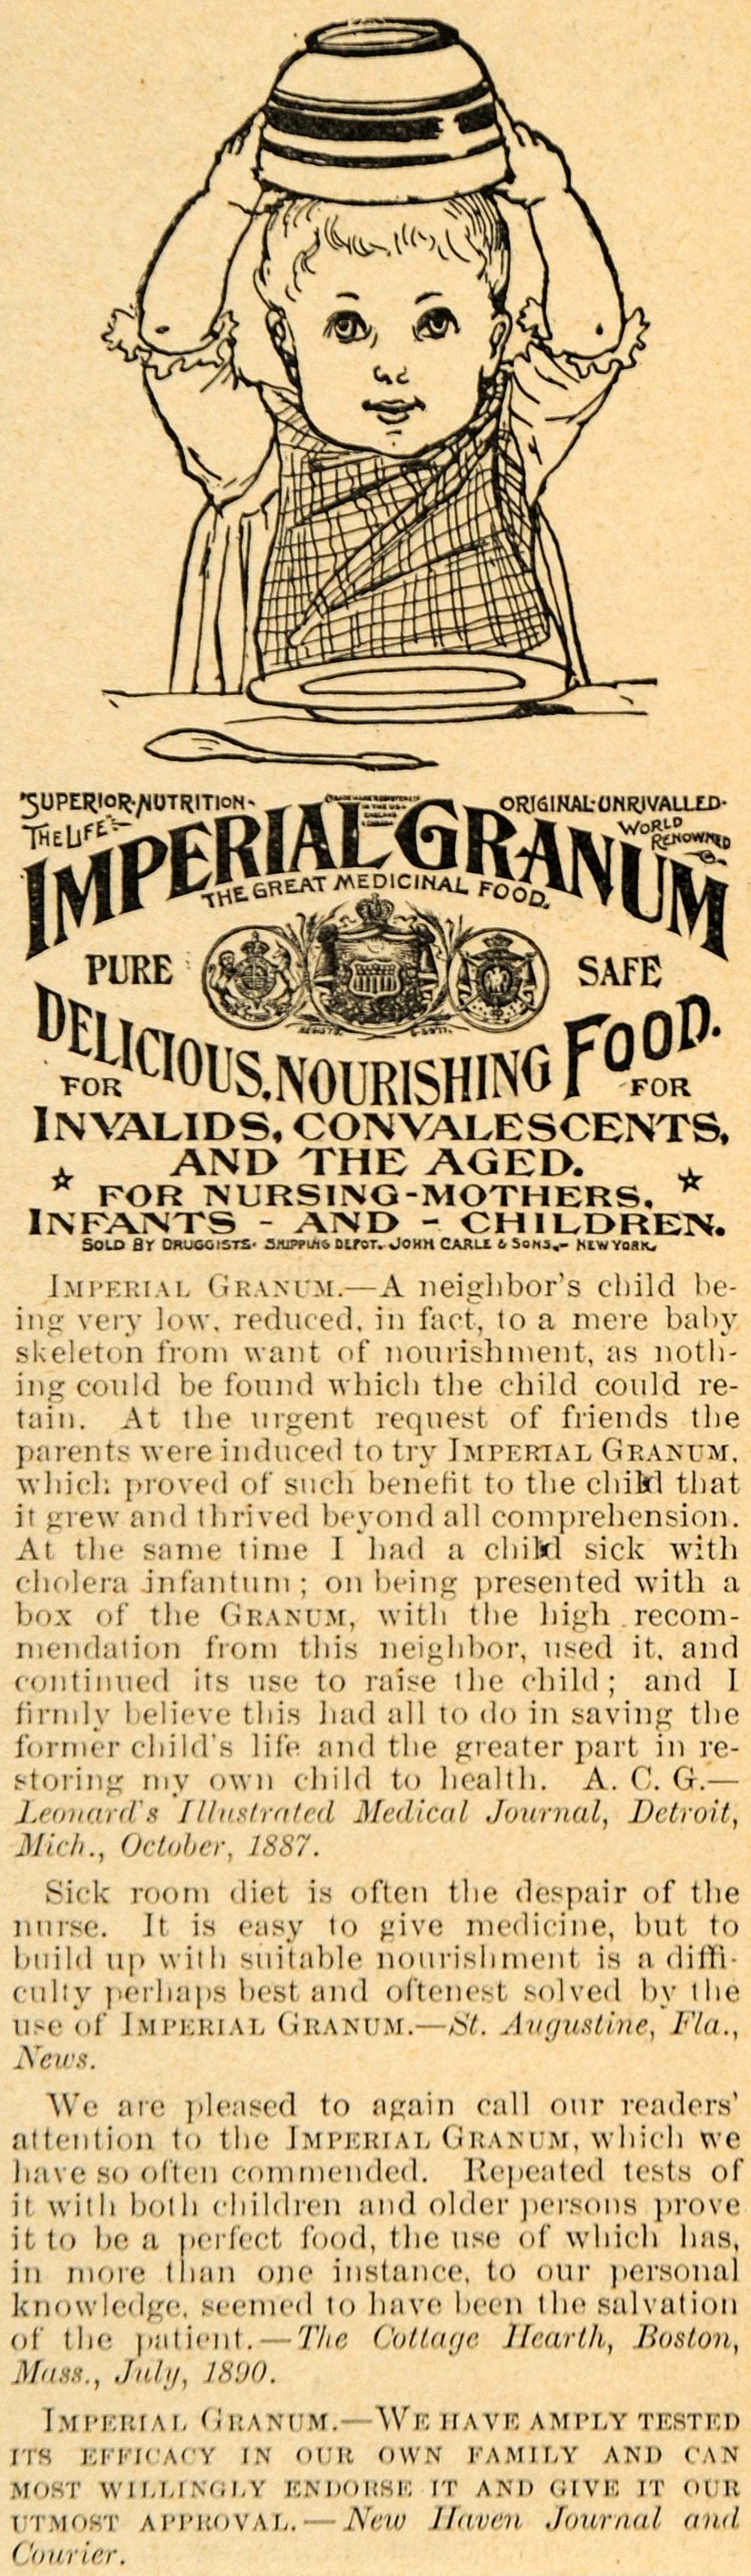 1892 Ad John Carle & Sons Imperial Granum Infants Food - ORIGINAL LHJ4